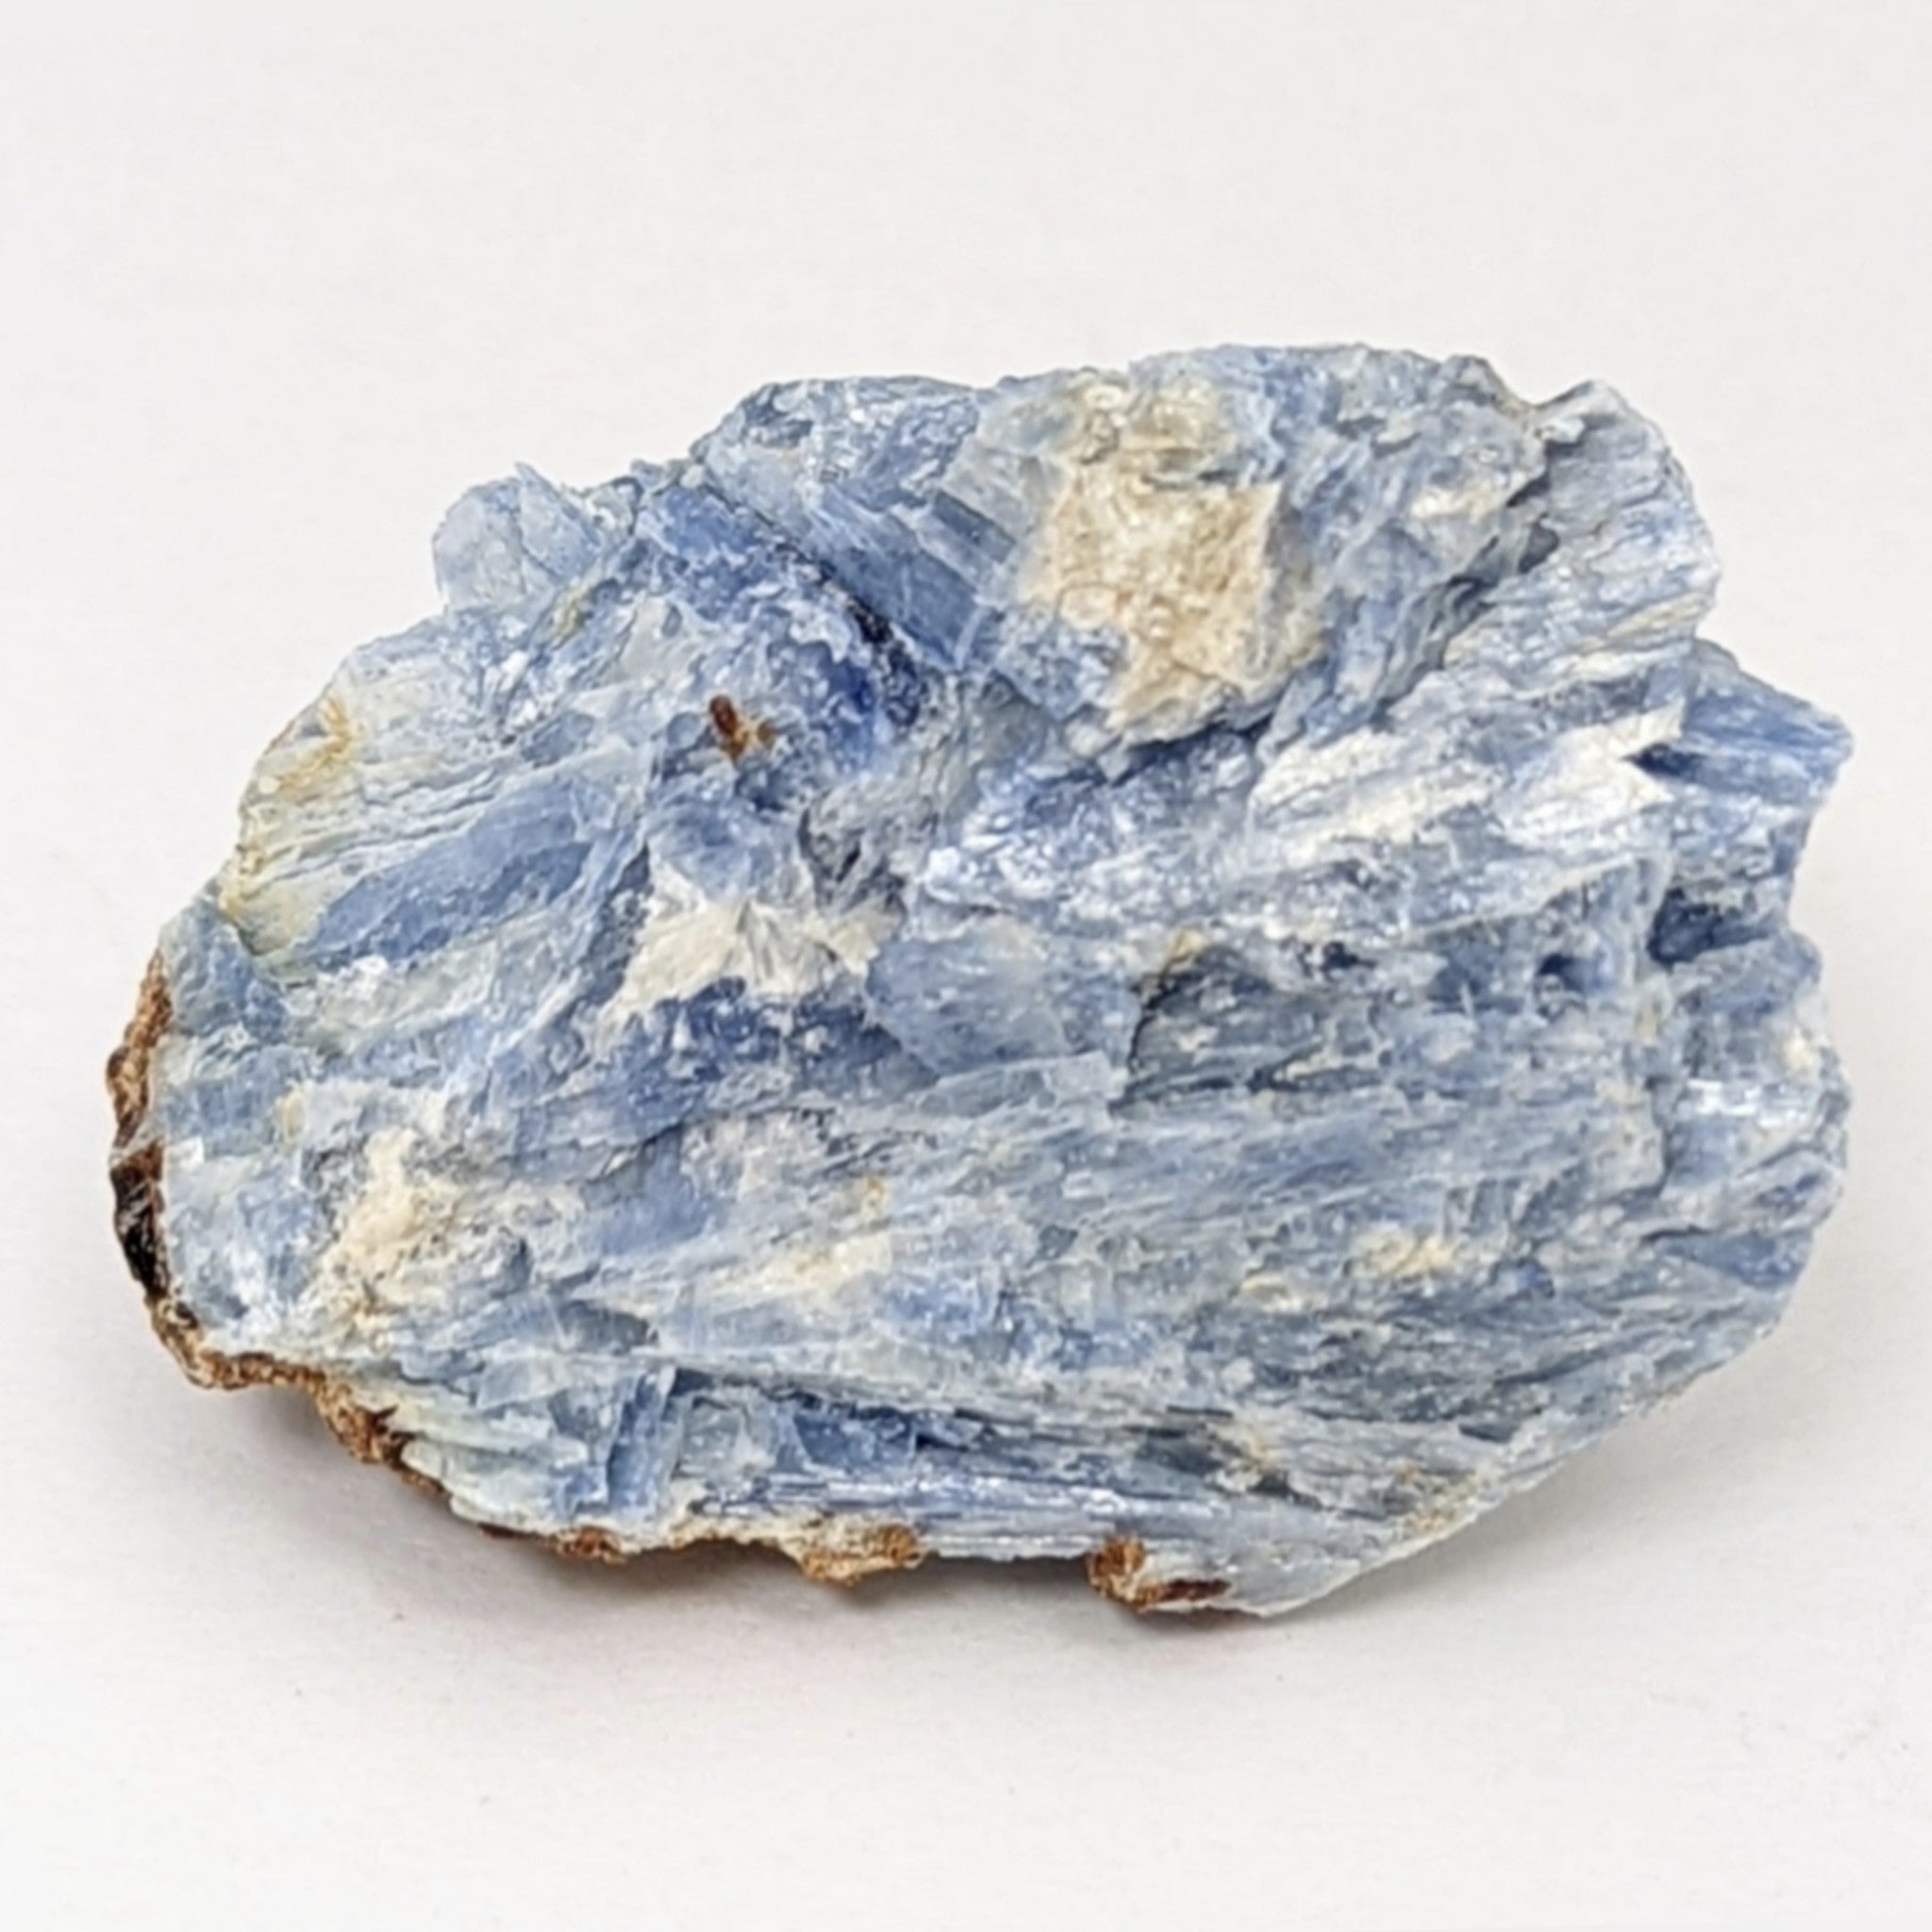 Small Natural Light Blue Kyanite Crystal Specimen